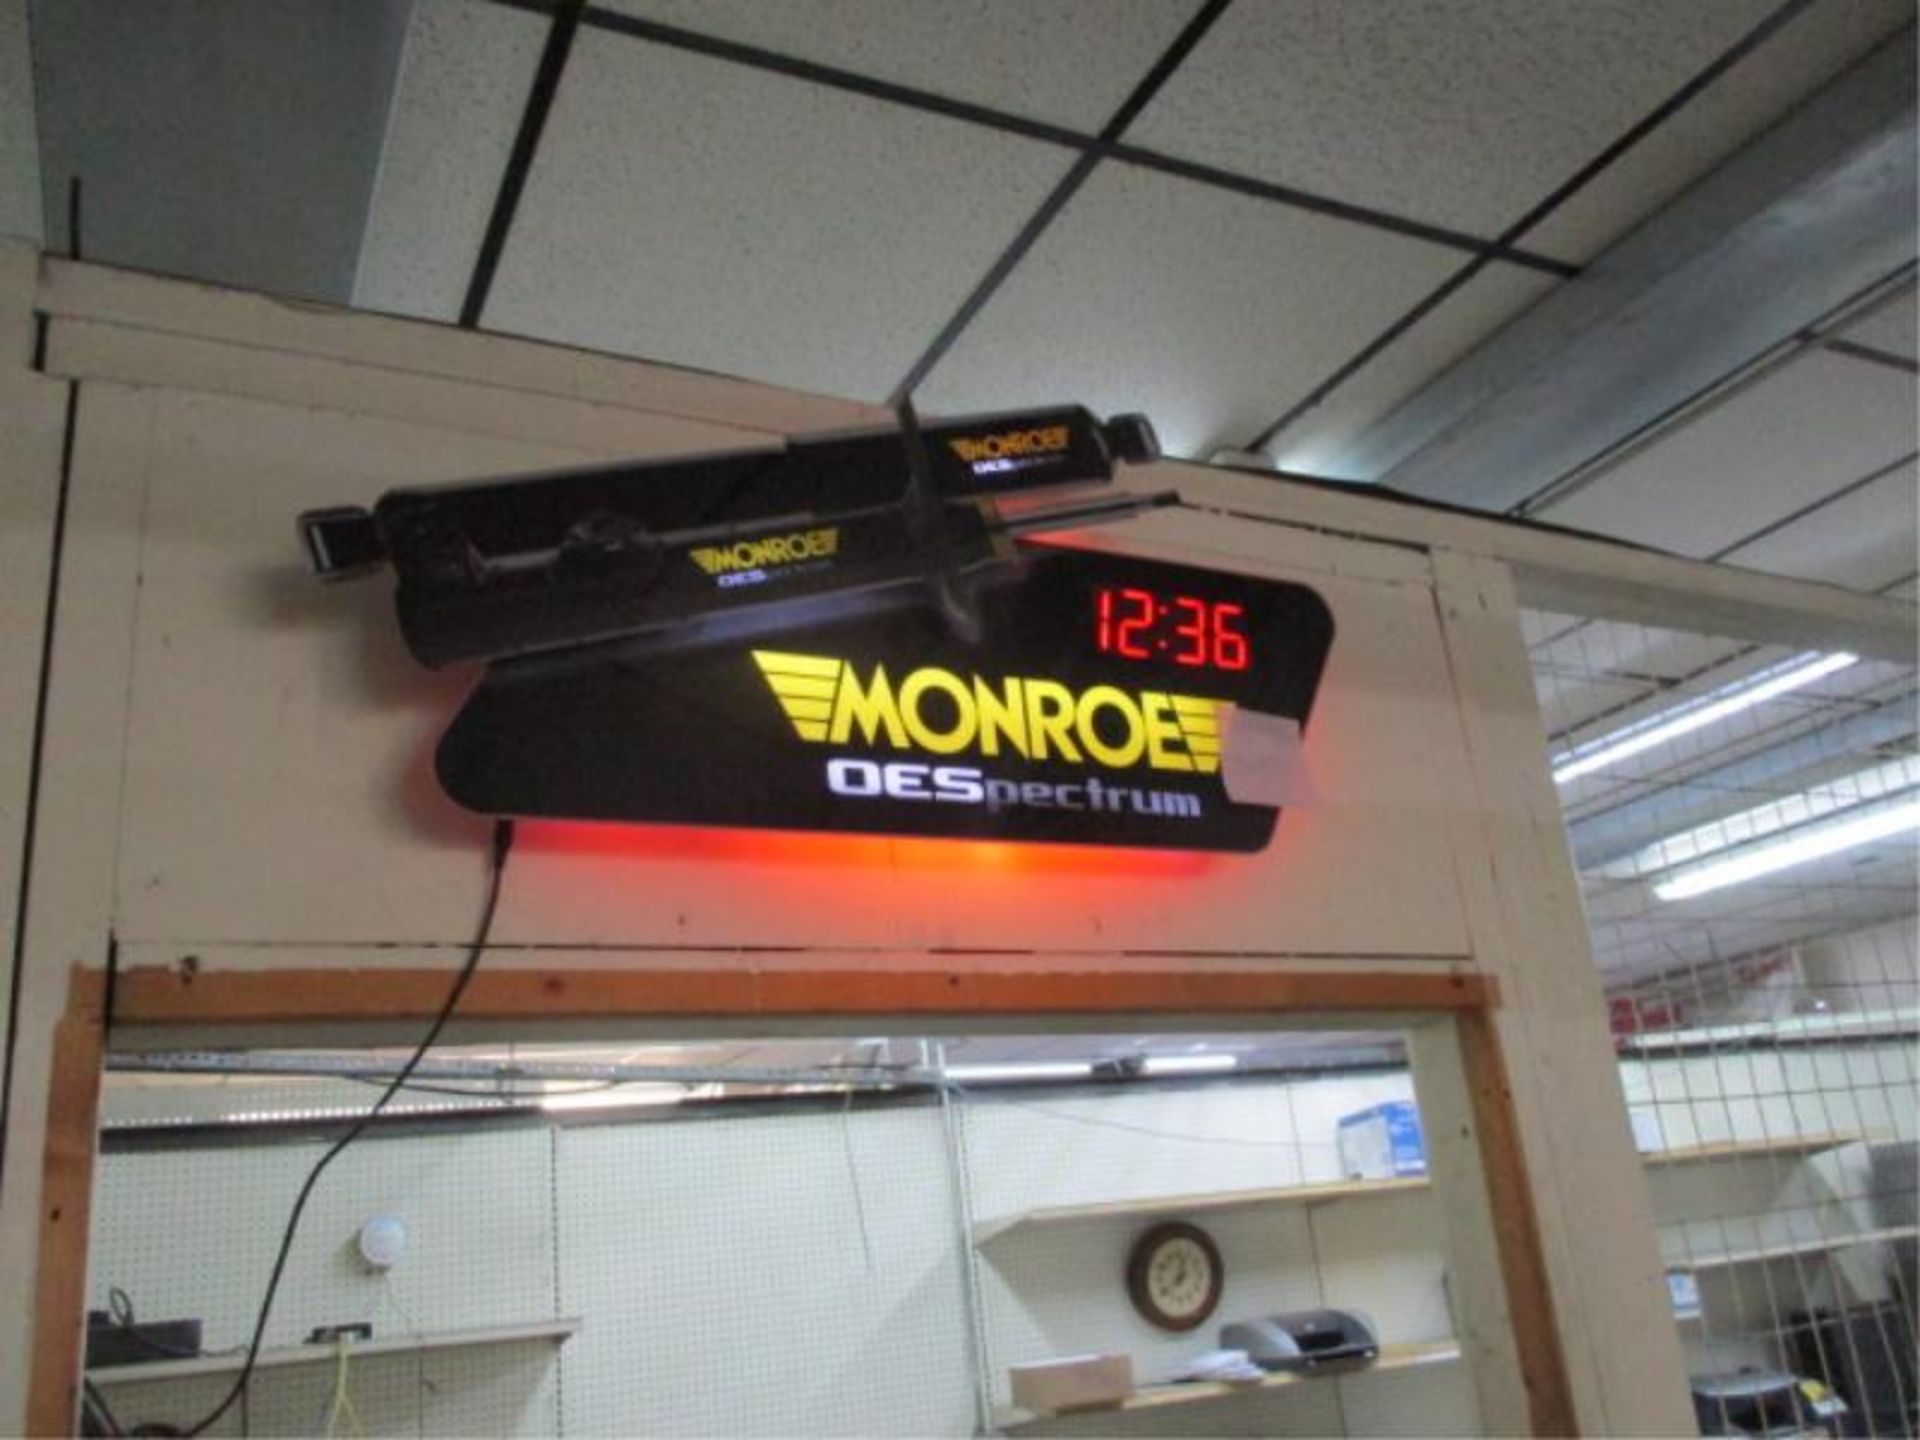 Monroe Light Sign/Clock